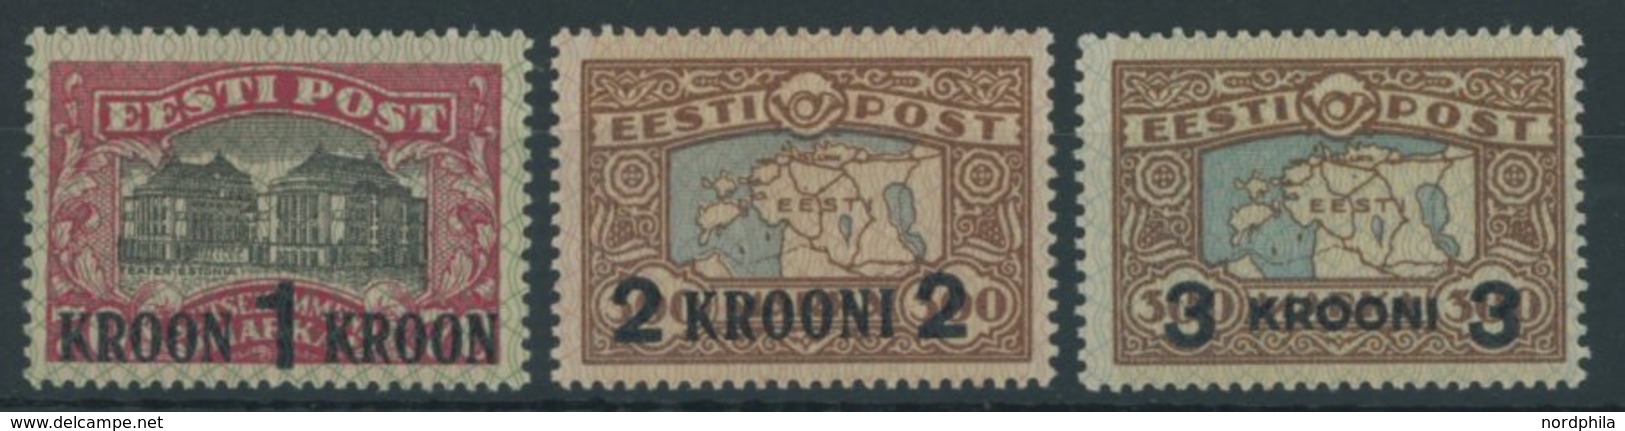 ESTLAND 87-89 *, 1930, 1 Kr. Auf 70 M. - 3 Kr. Auf 300 M., Falzrest, Prachtsatz - Estonia